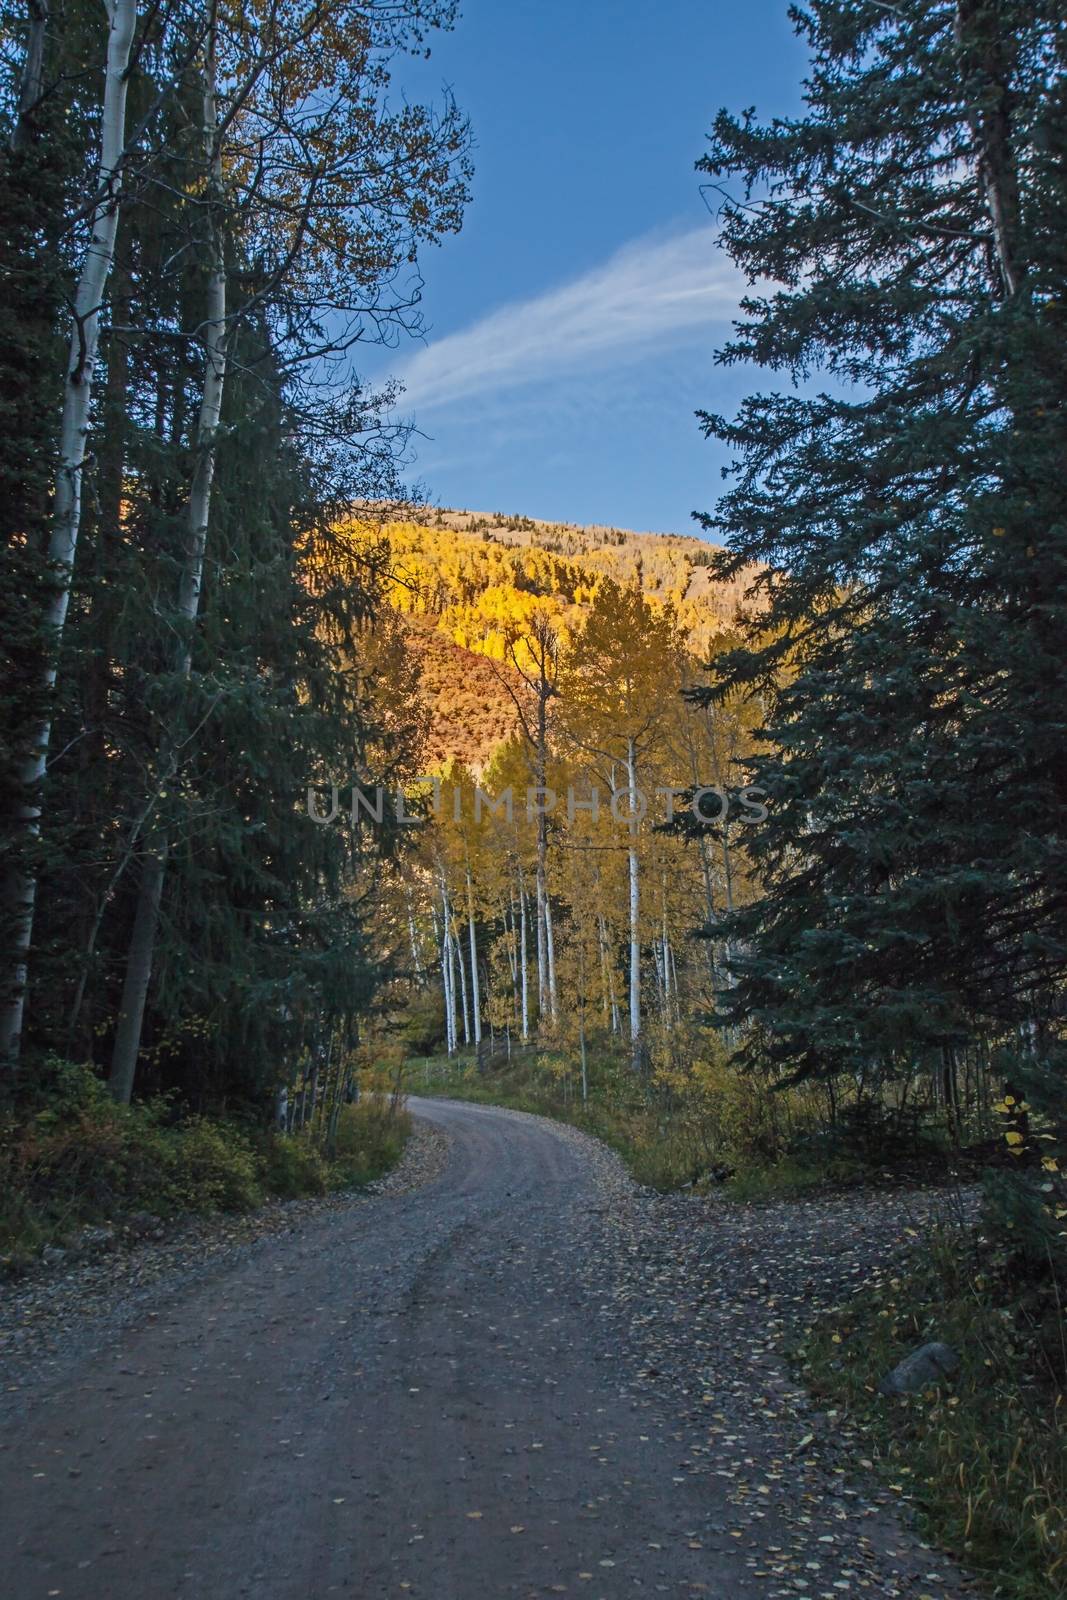 Utah Mountain road. by kobus_peche